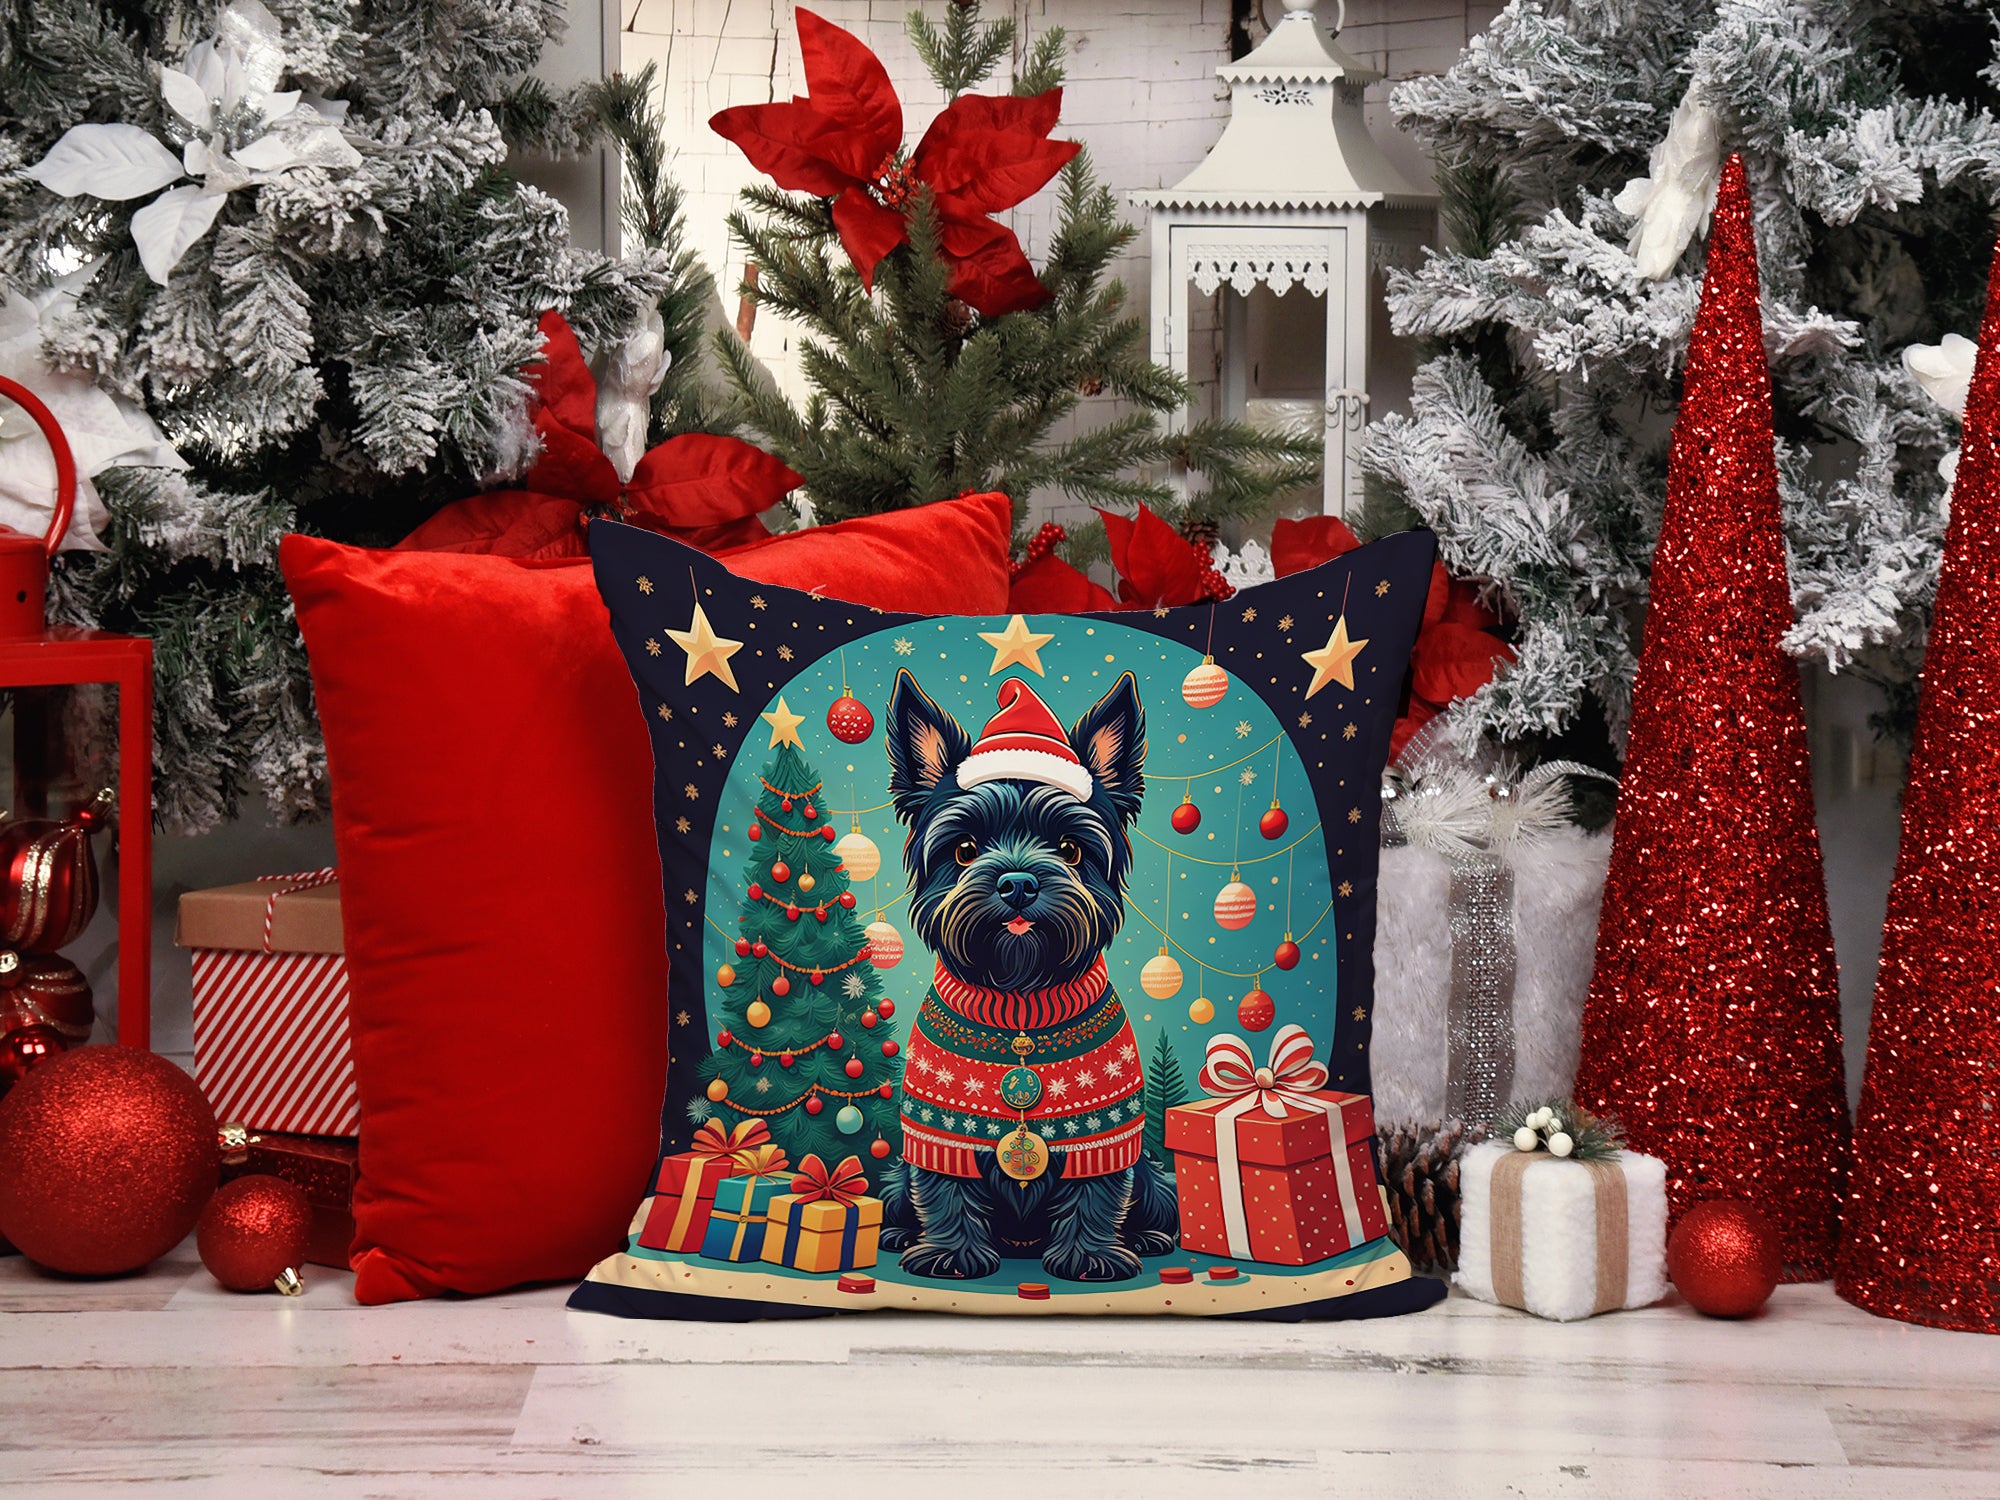 Scottish Terrier Christmas Fabric Decorative Pillow  the-store.com.